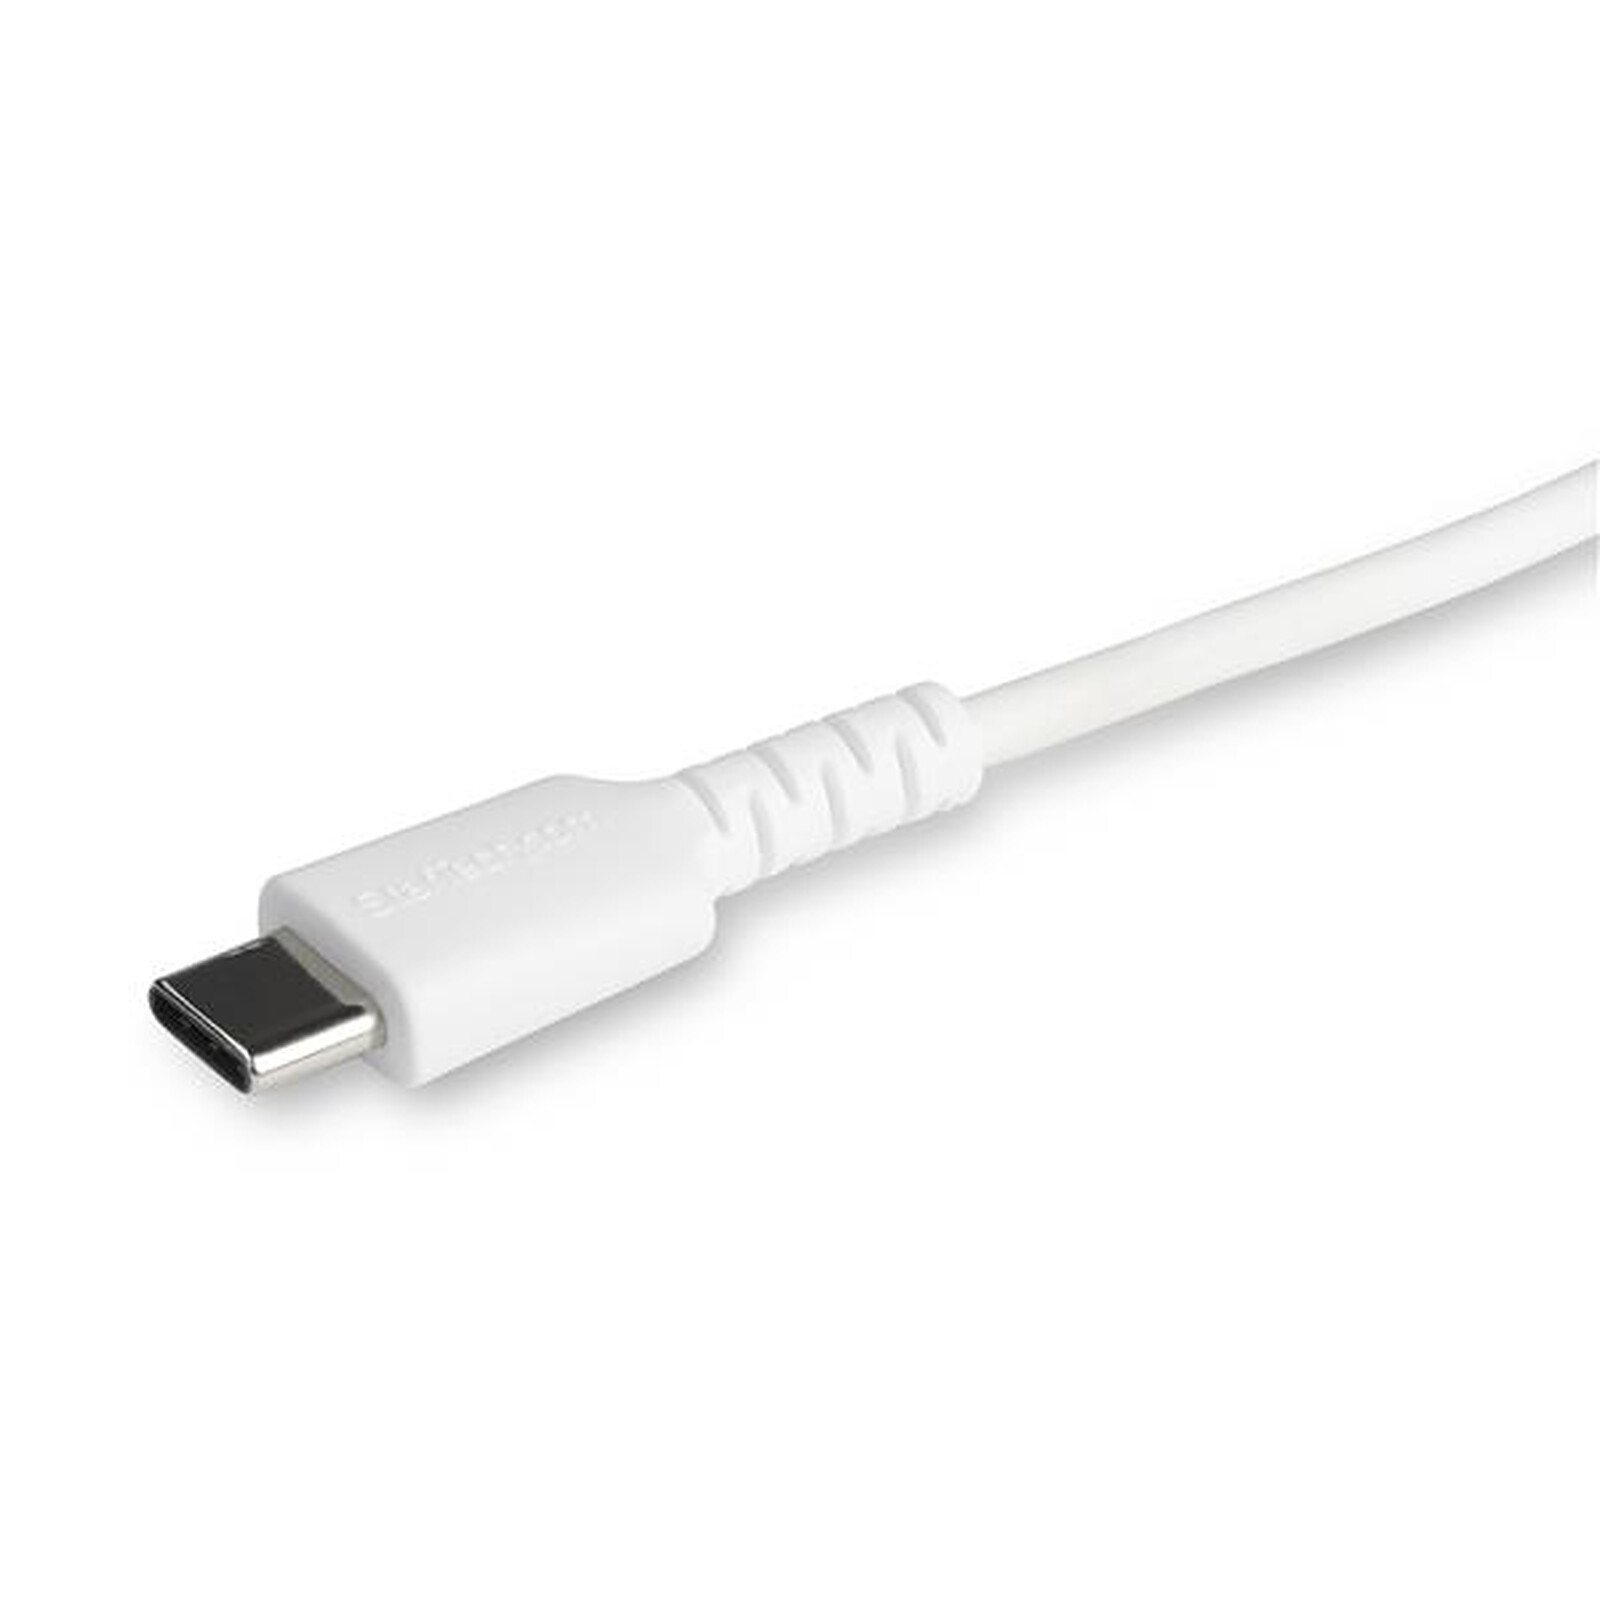 Câble USB-C vers Lightning Noir Robuste 2m - Câble de  Charge/Synchronistation USB Type C vers Lightning Fibre Aramide -  iPad/iPhone 12 Certifié Apple